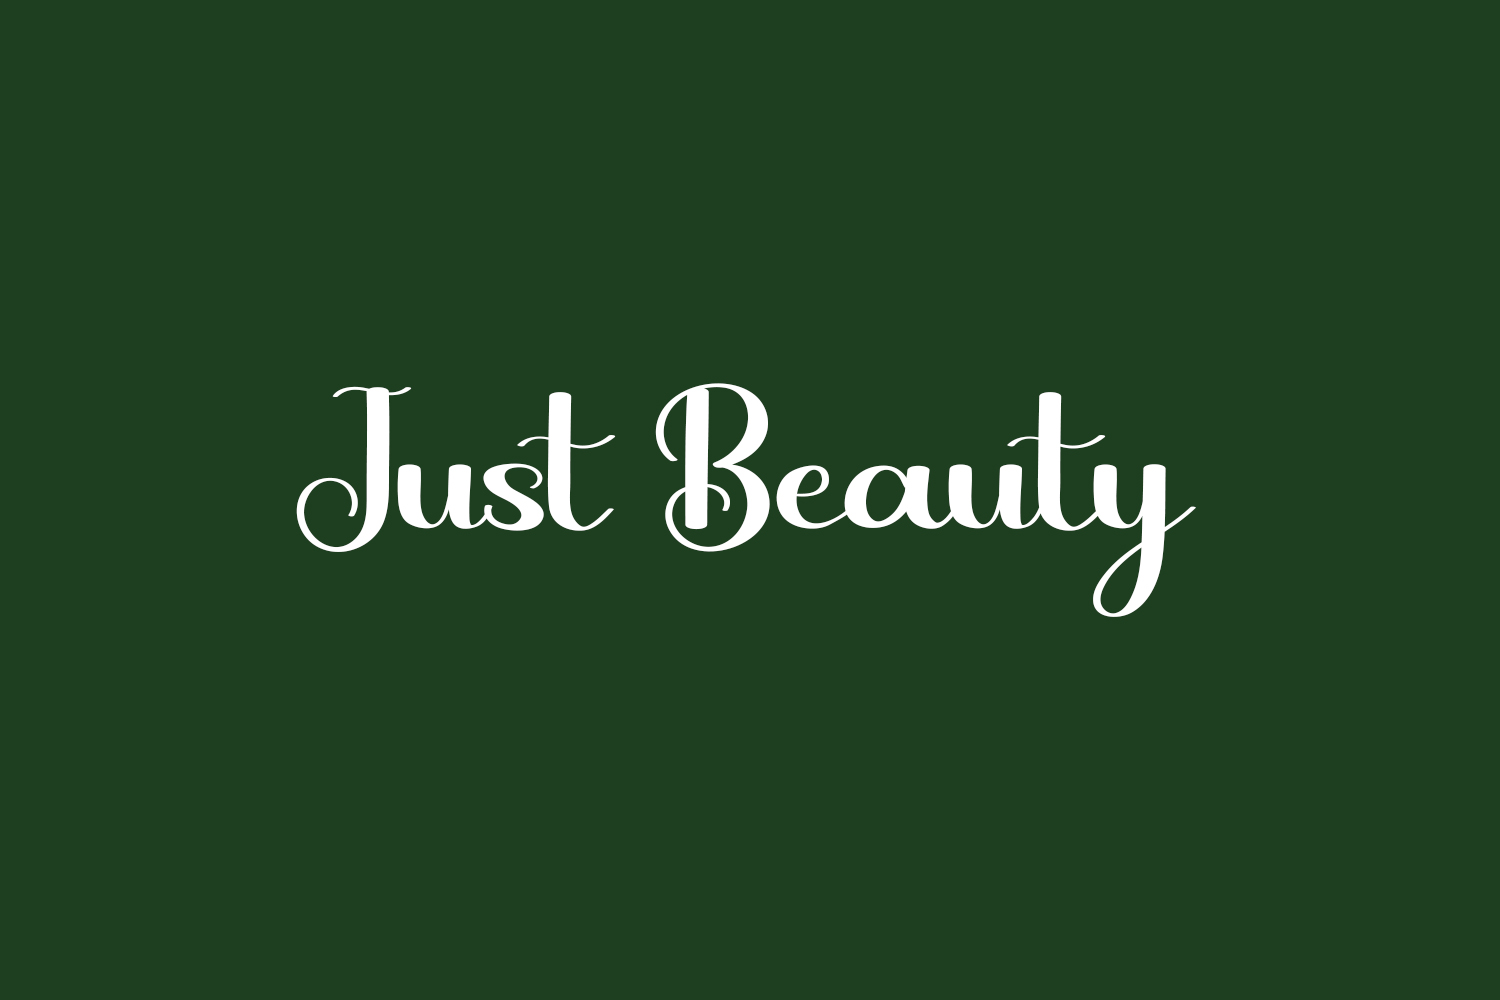 Just Beauty Free Font